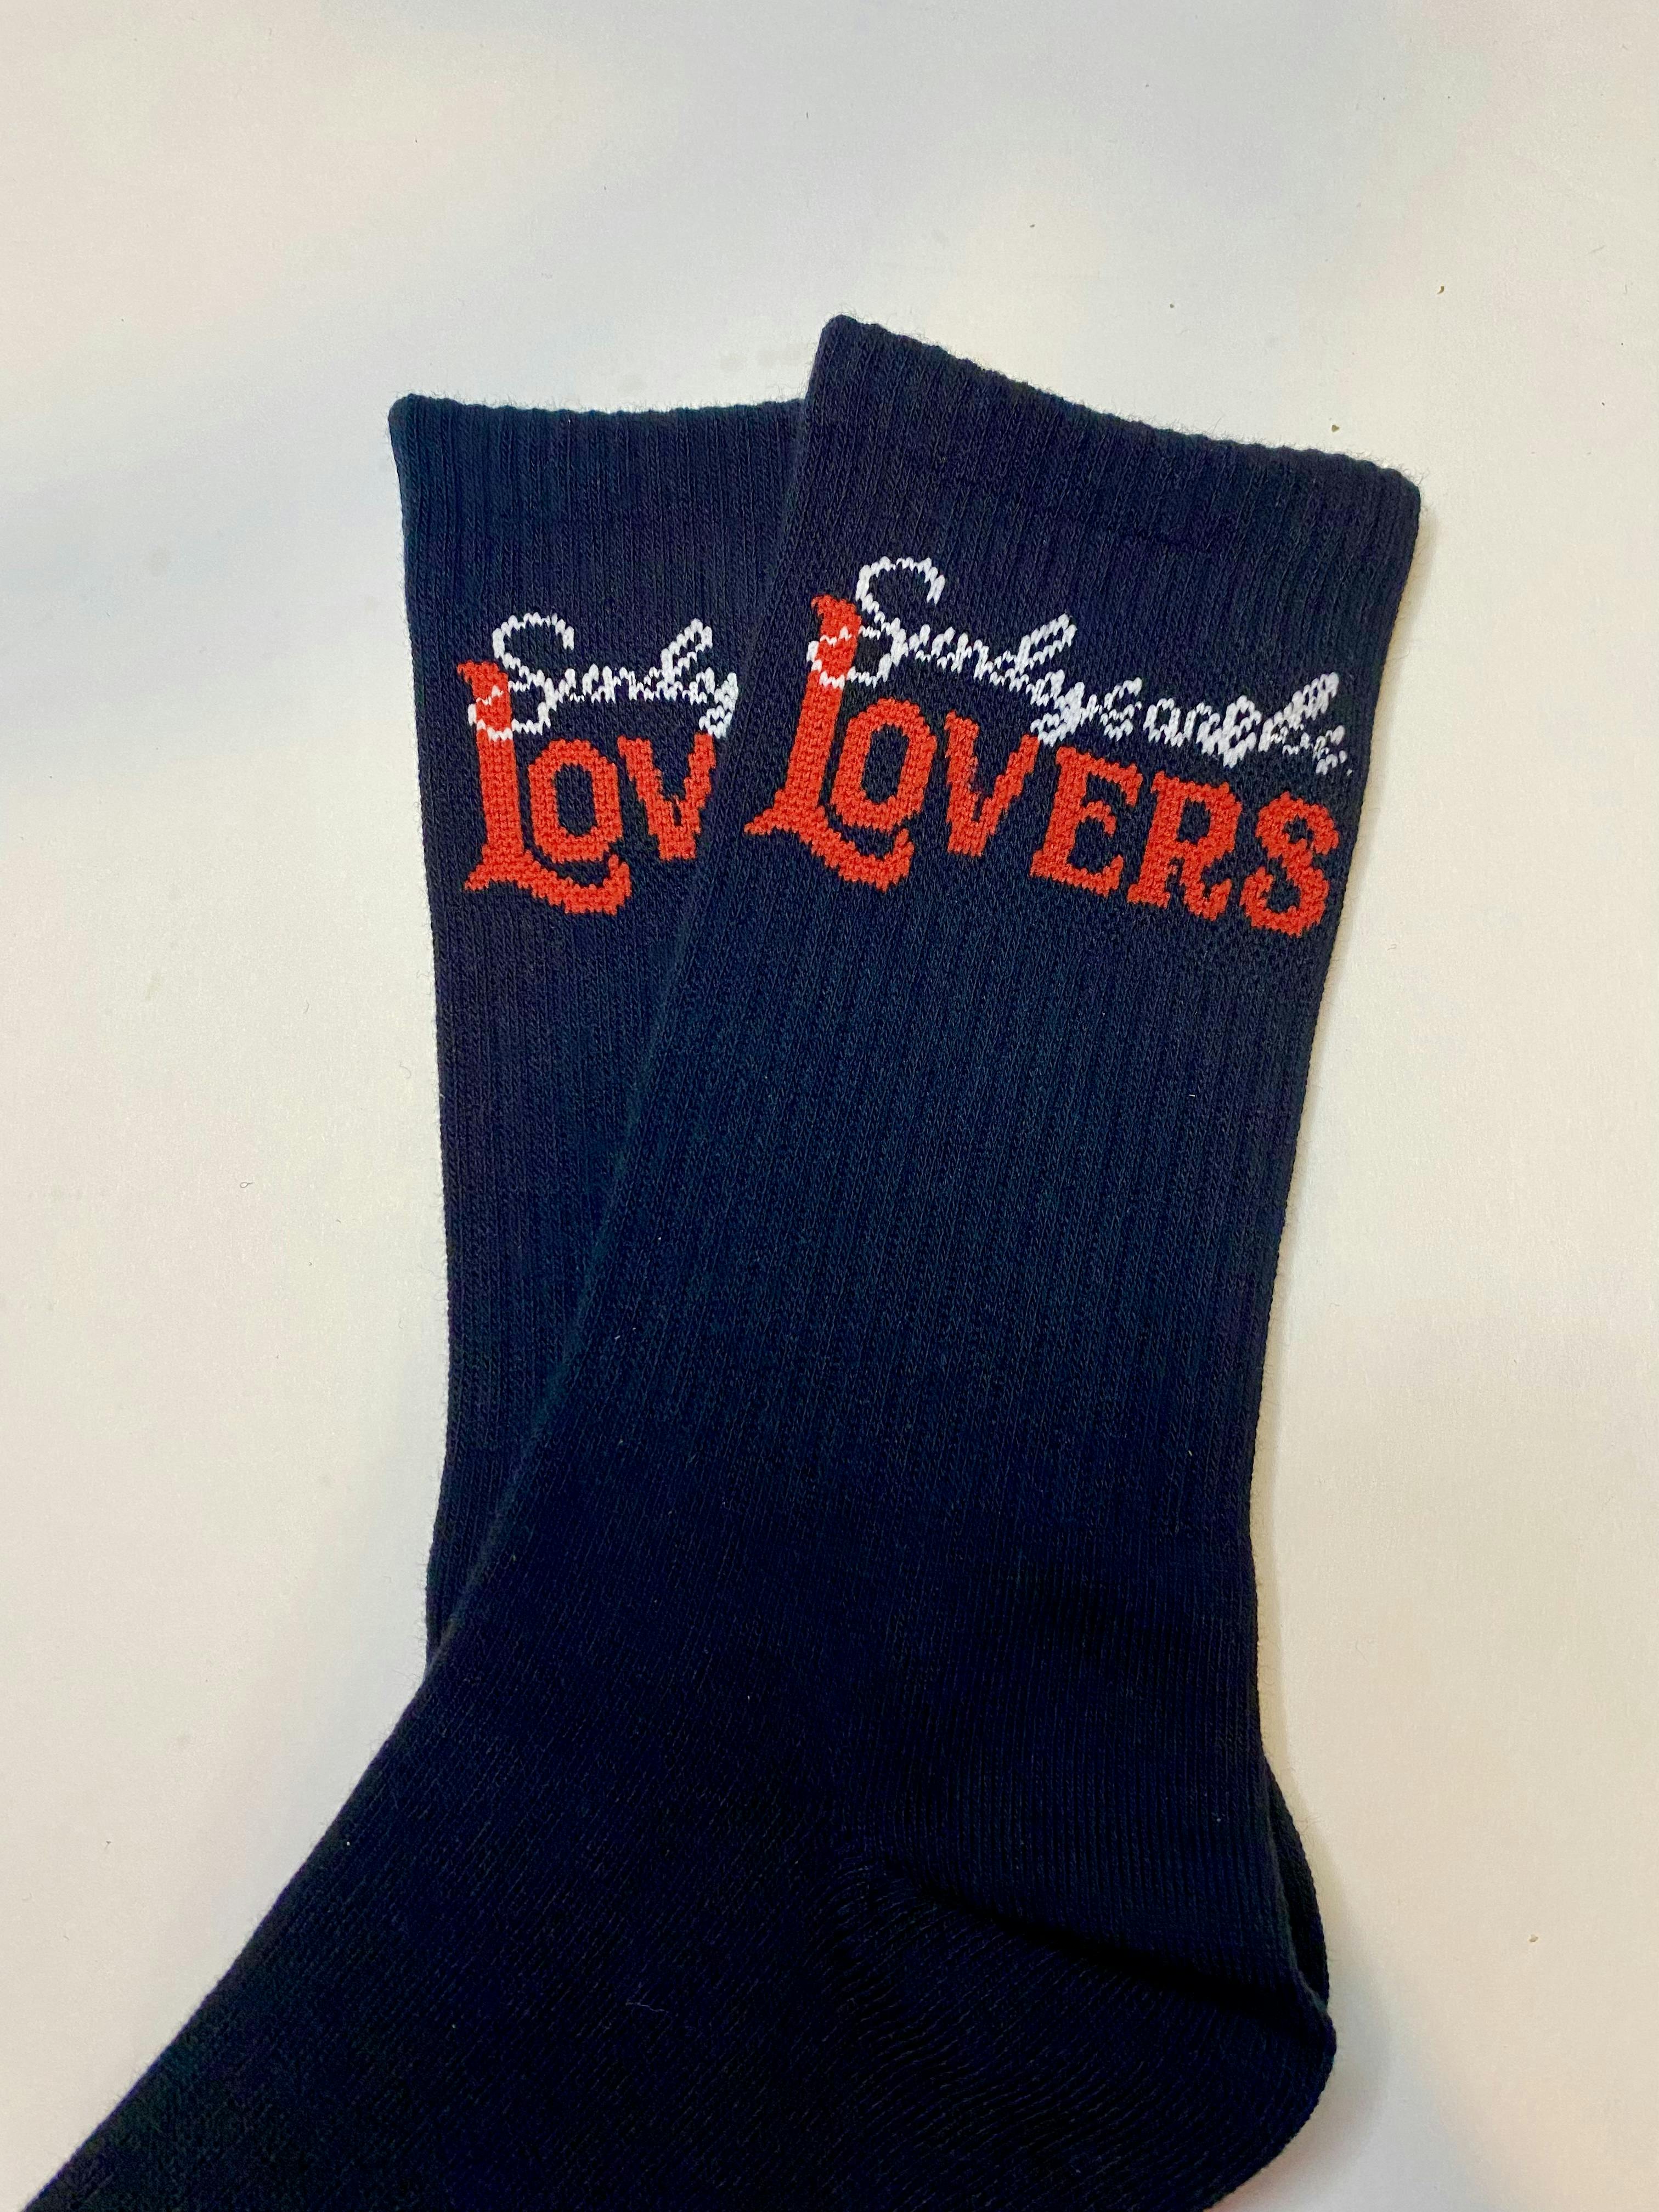 Sunday’s Are For lovers Black Socks